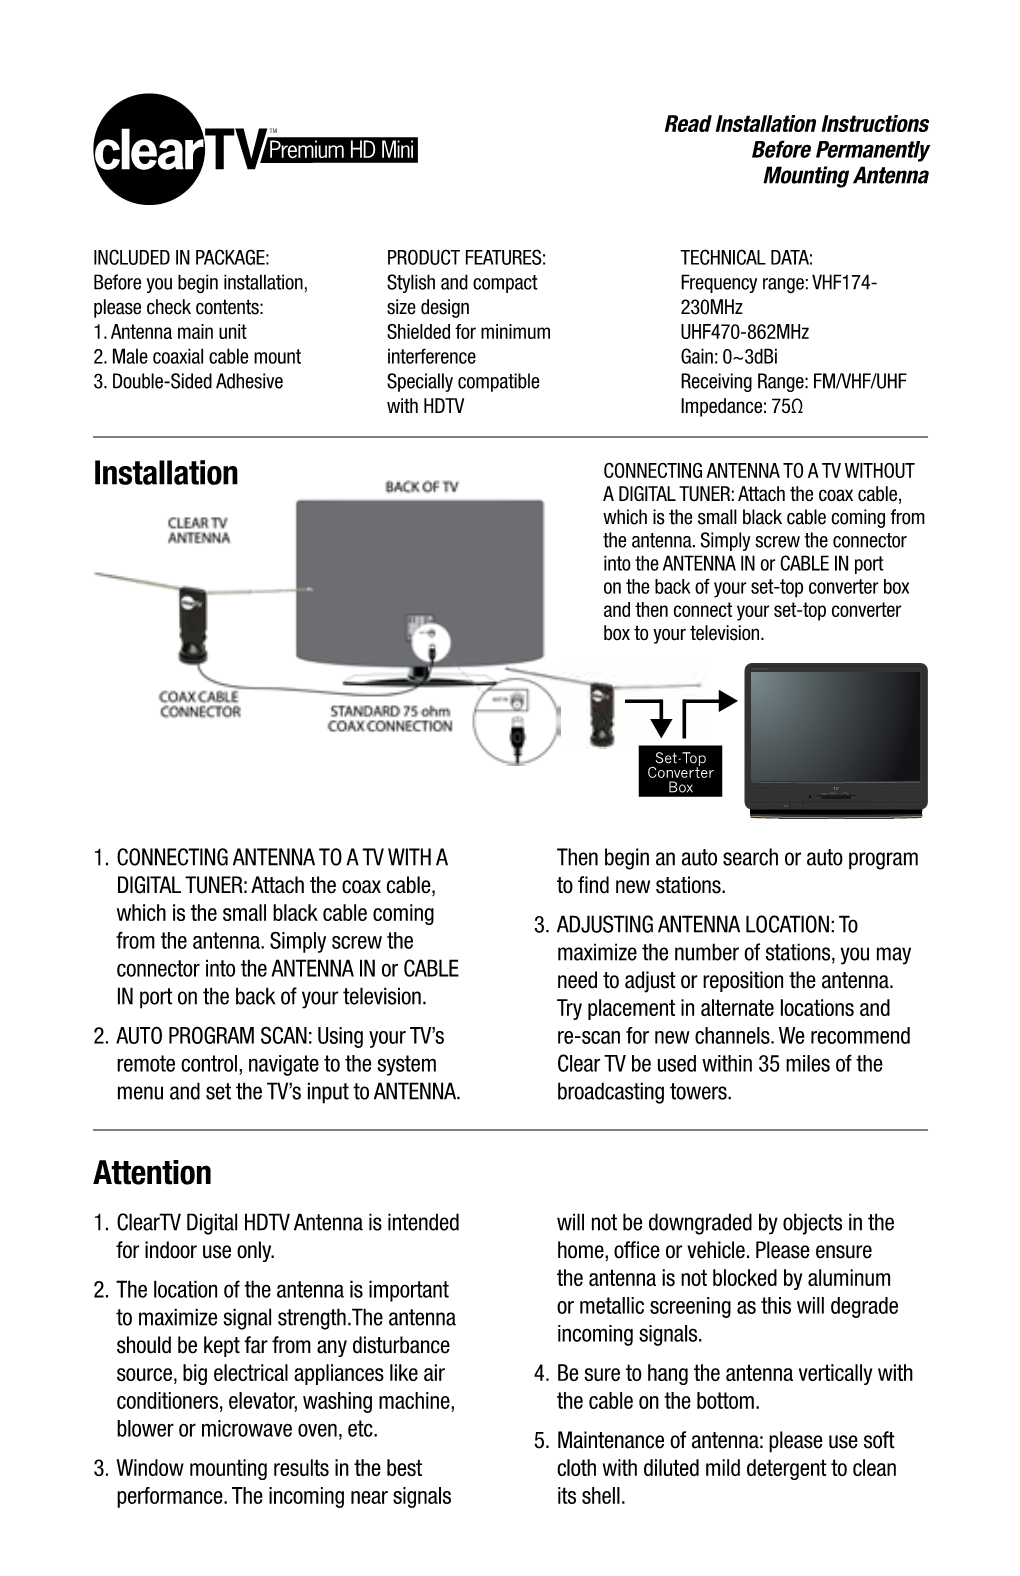 Clear TV Premium HD Mini Manual